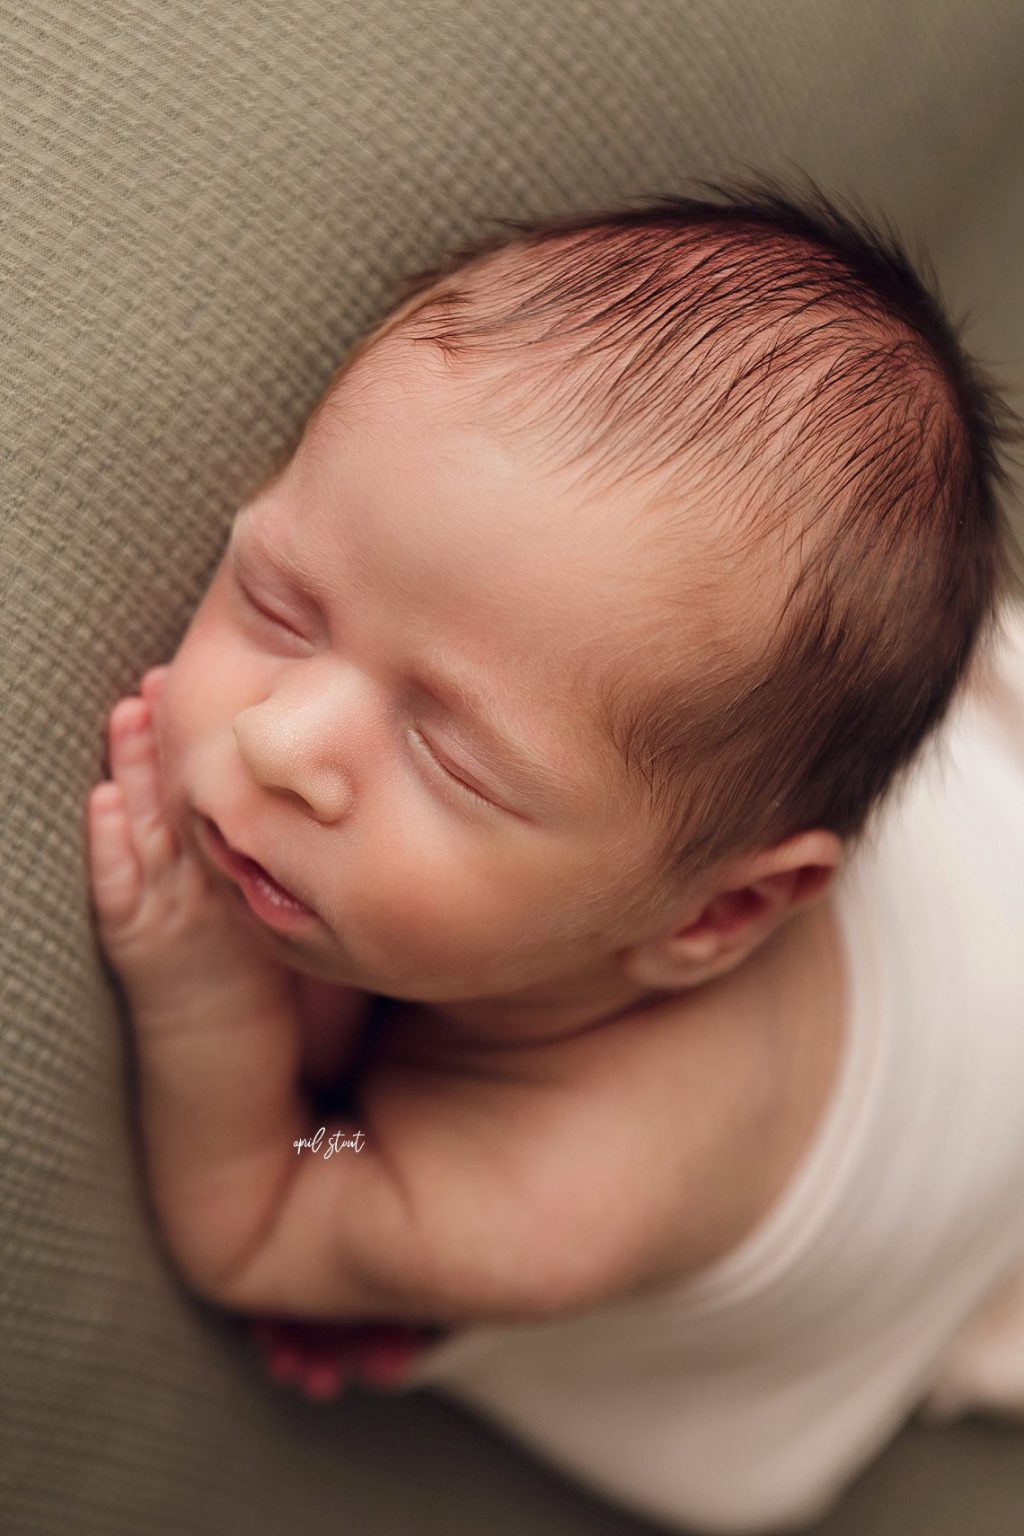 Oklahoma best baby newborn photographers April Stout